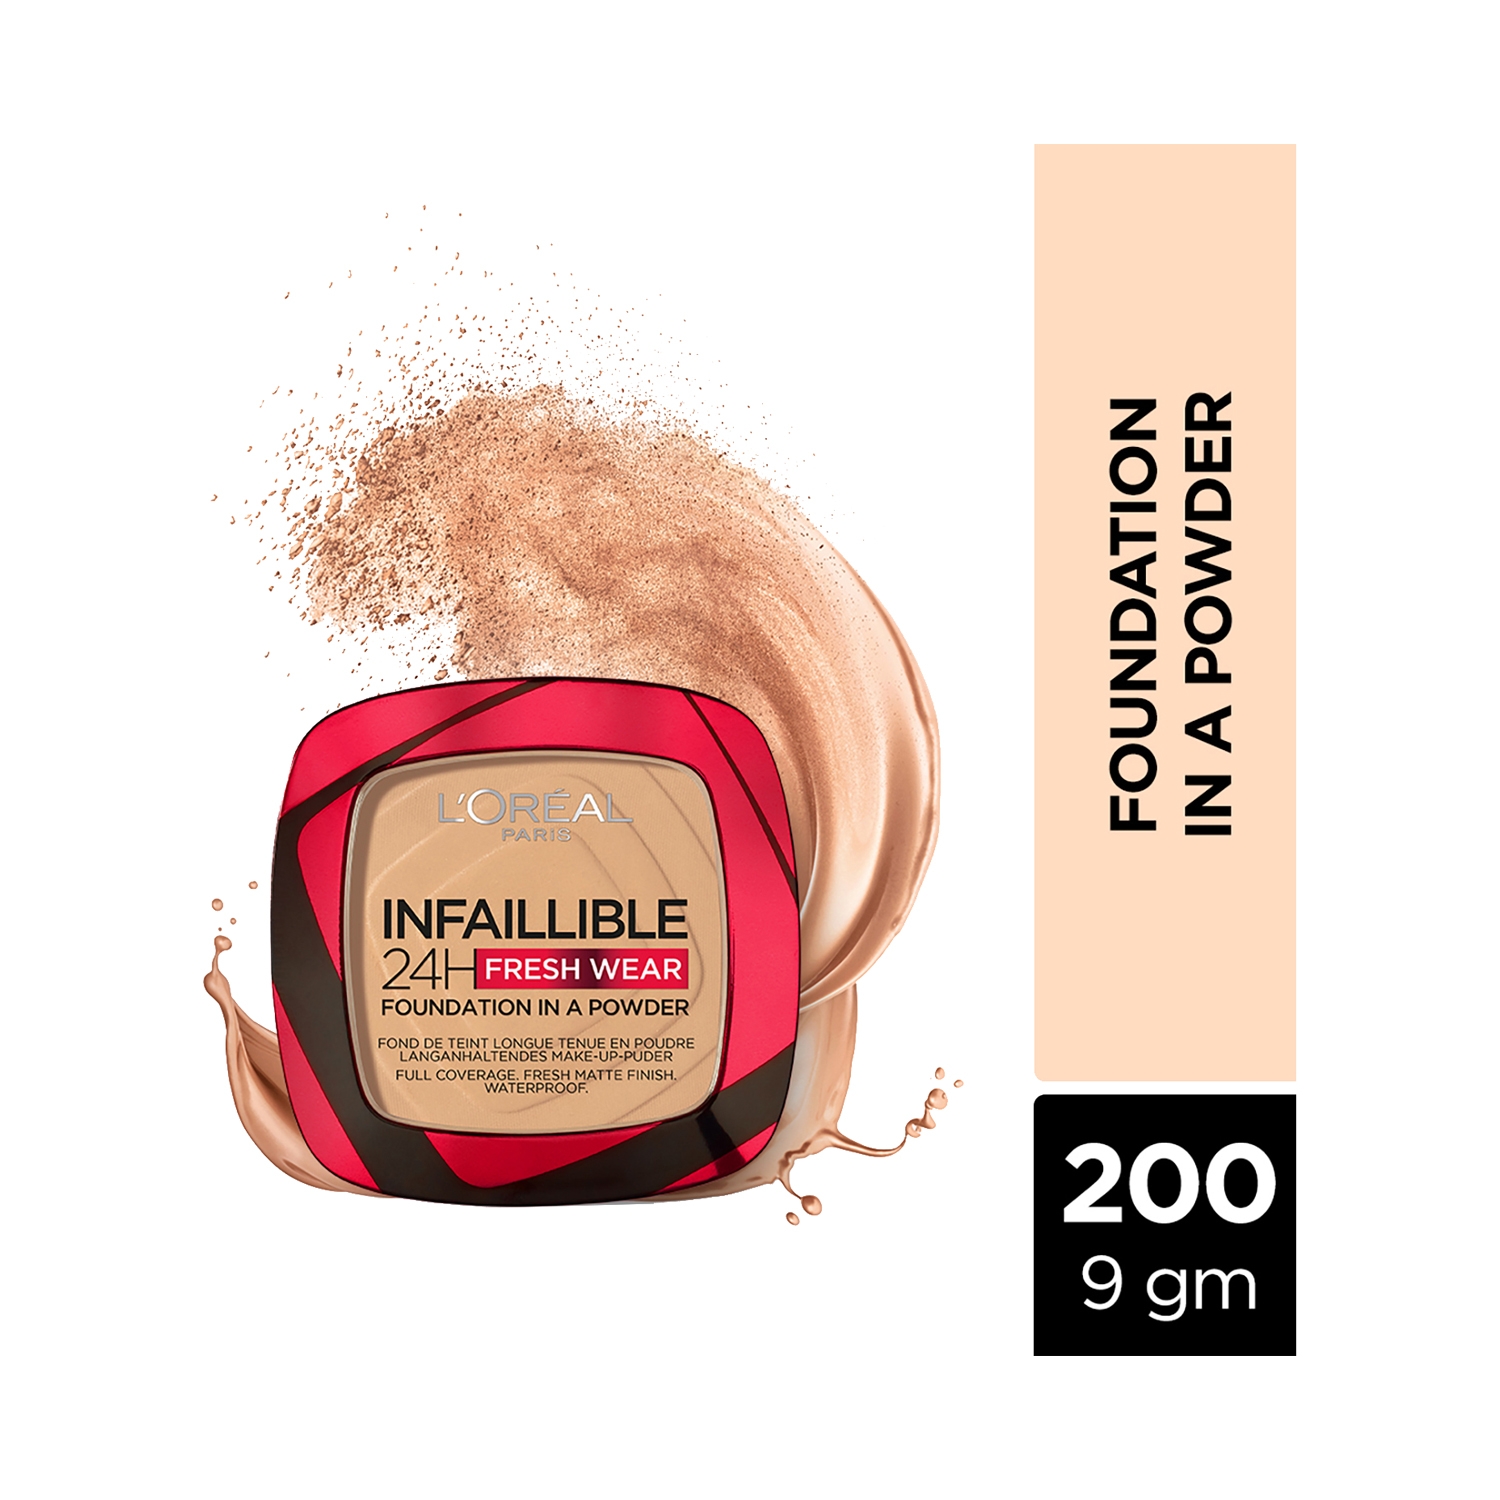 L'Oreal Paris | L'Oreal Paris Infallible 24H Fresh Wear Foundation In A Powder - 200 Golden Sand (9g)